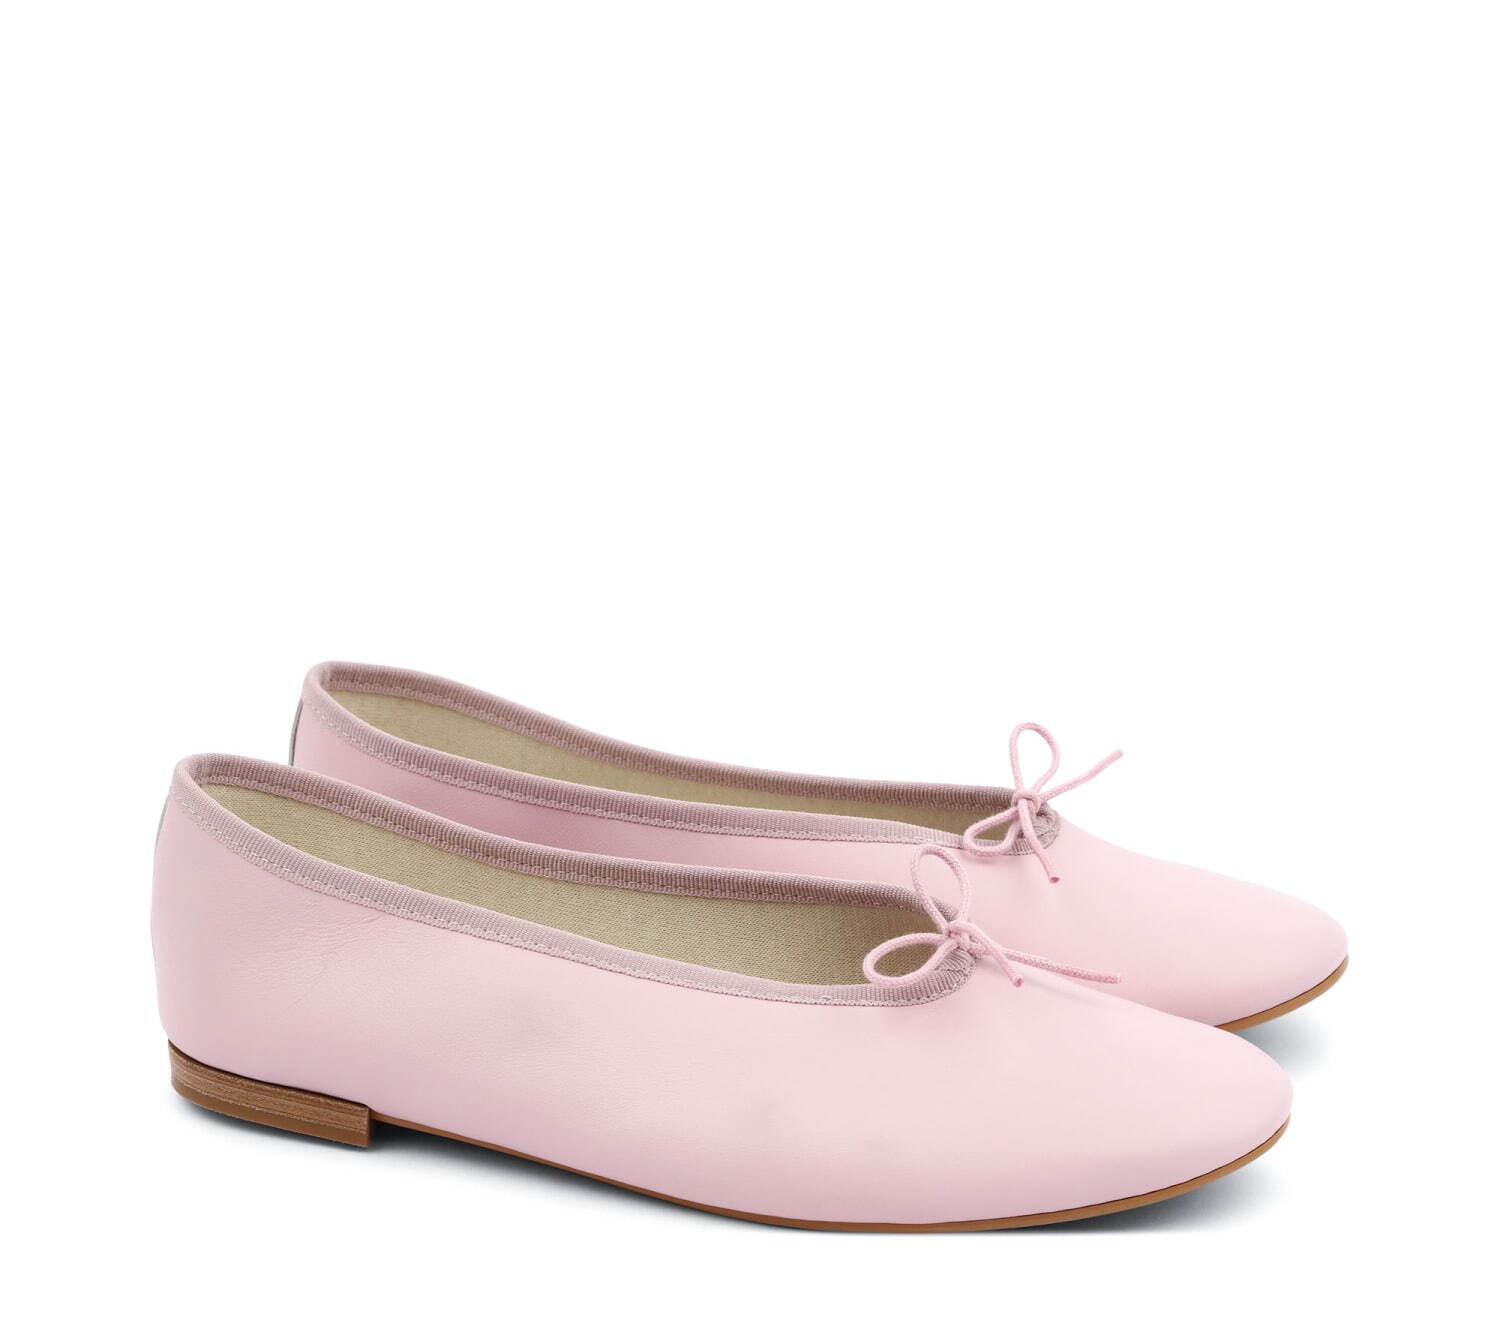 Lilouh Ballerinas (Old Pink) 51,700円